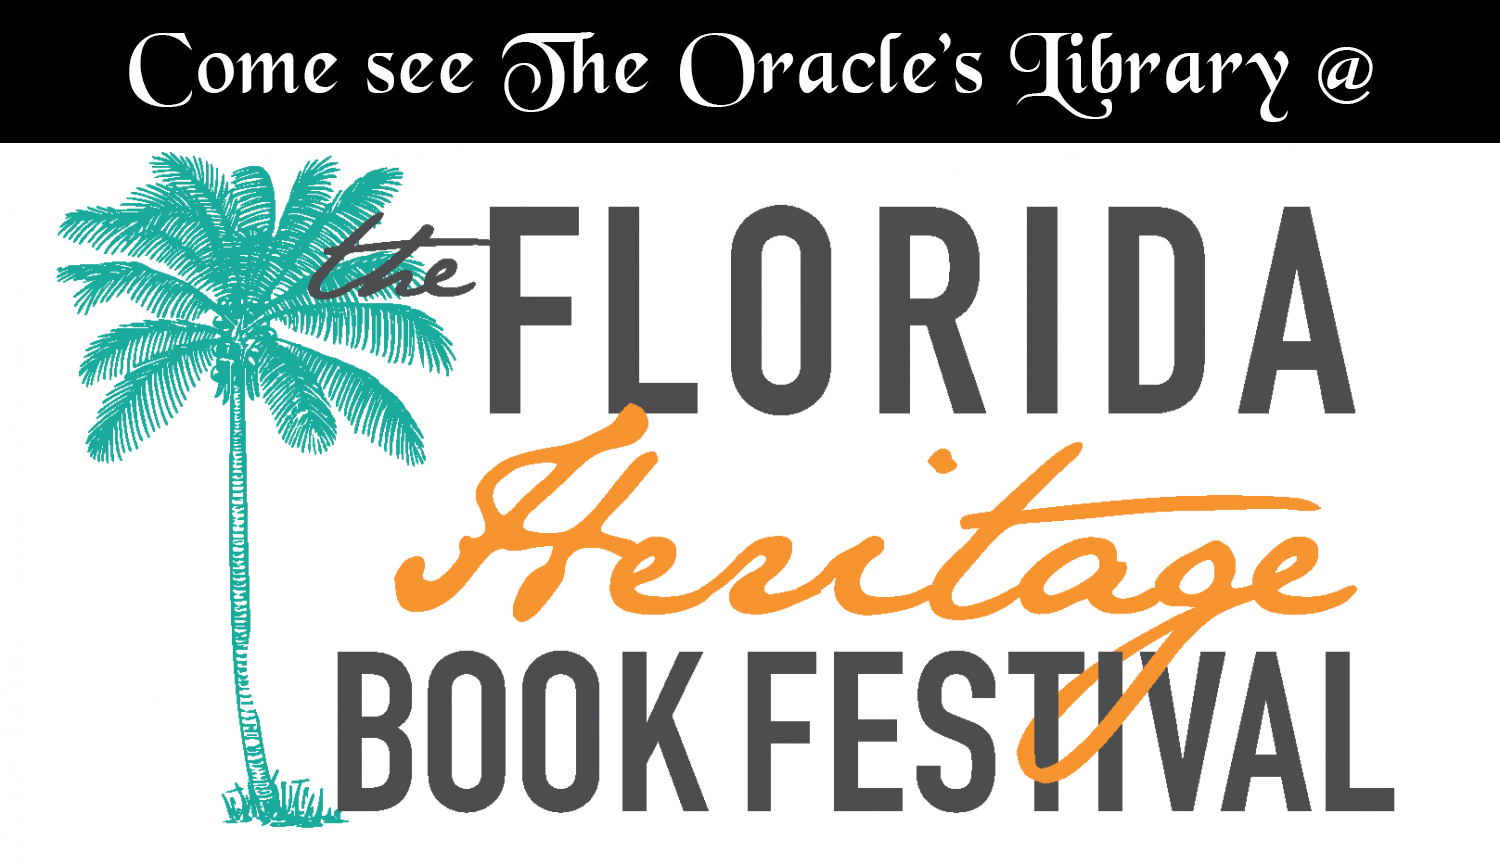 Florida heritage book festival